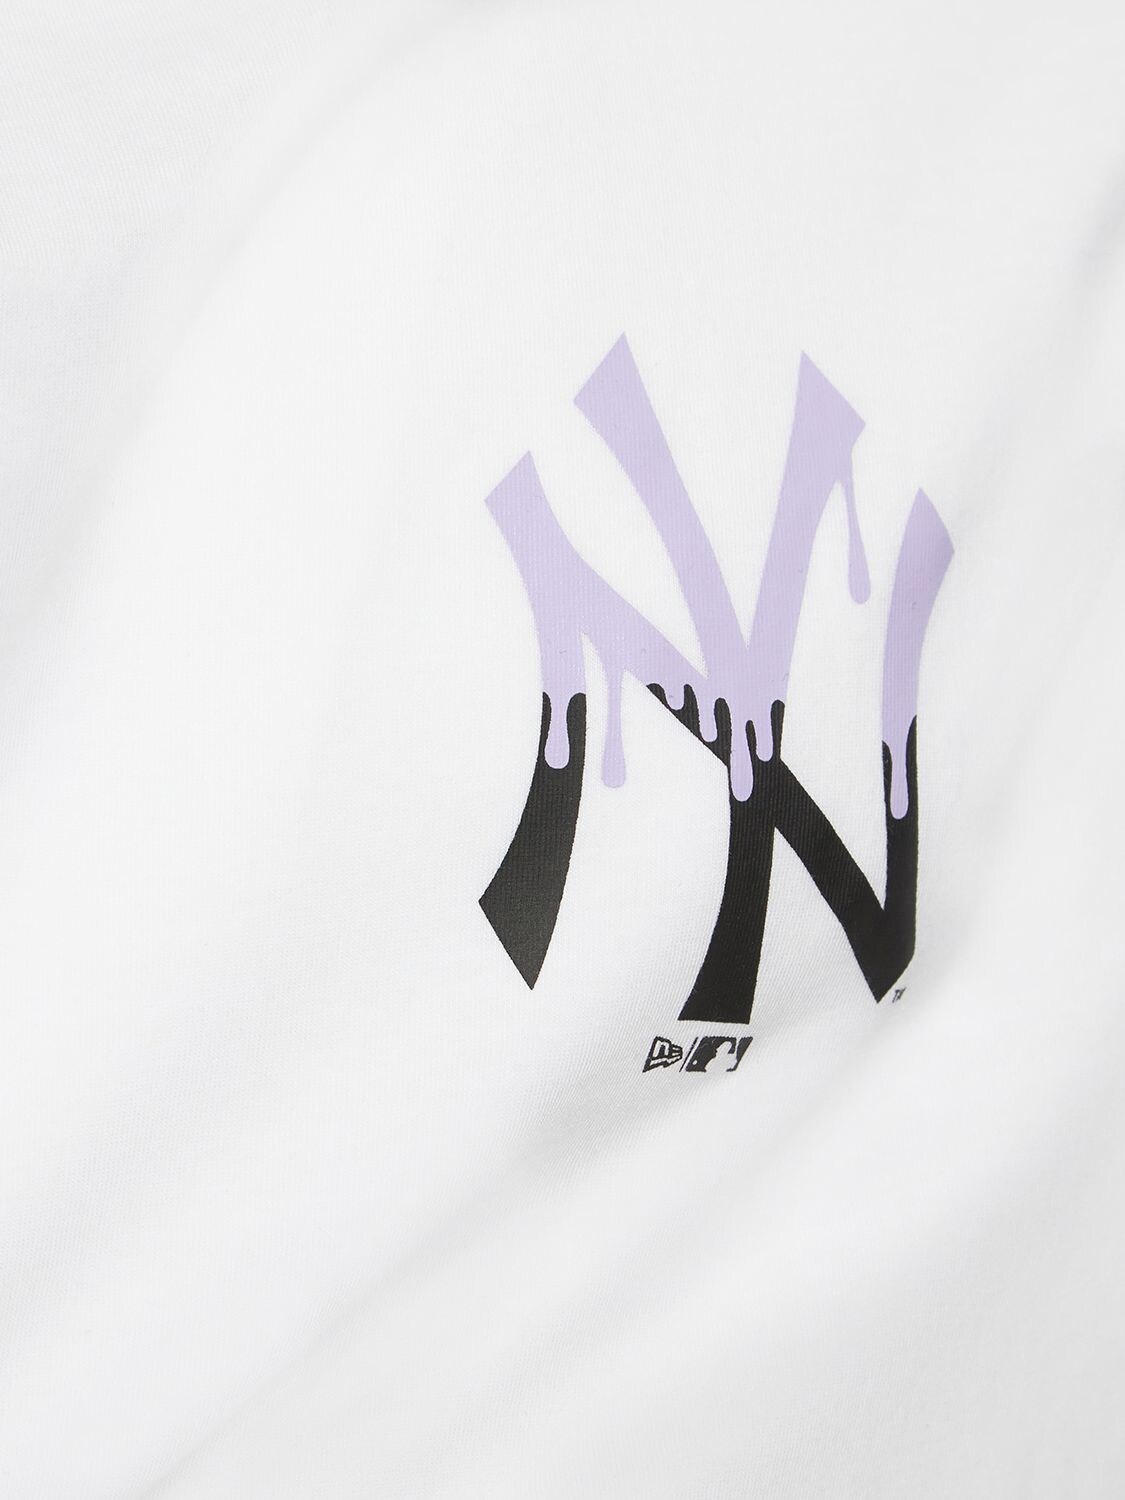 New Era Team Drip NY Yankees T-Shirt